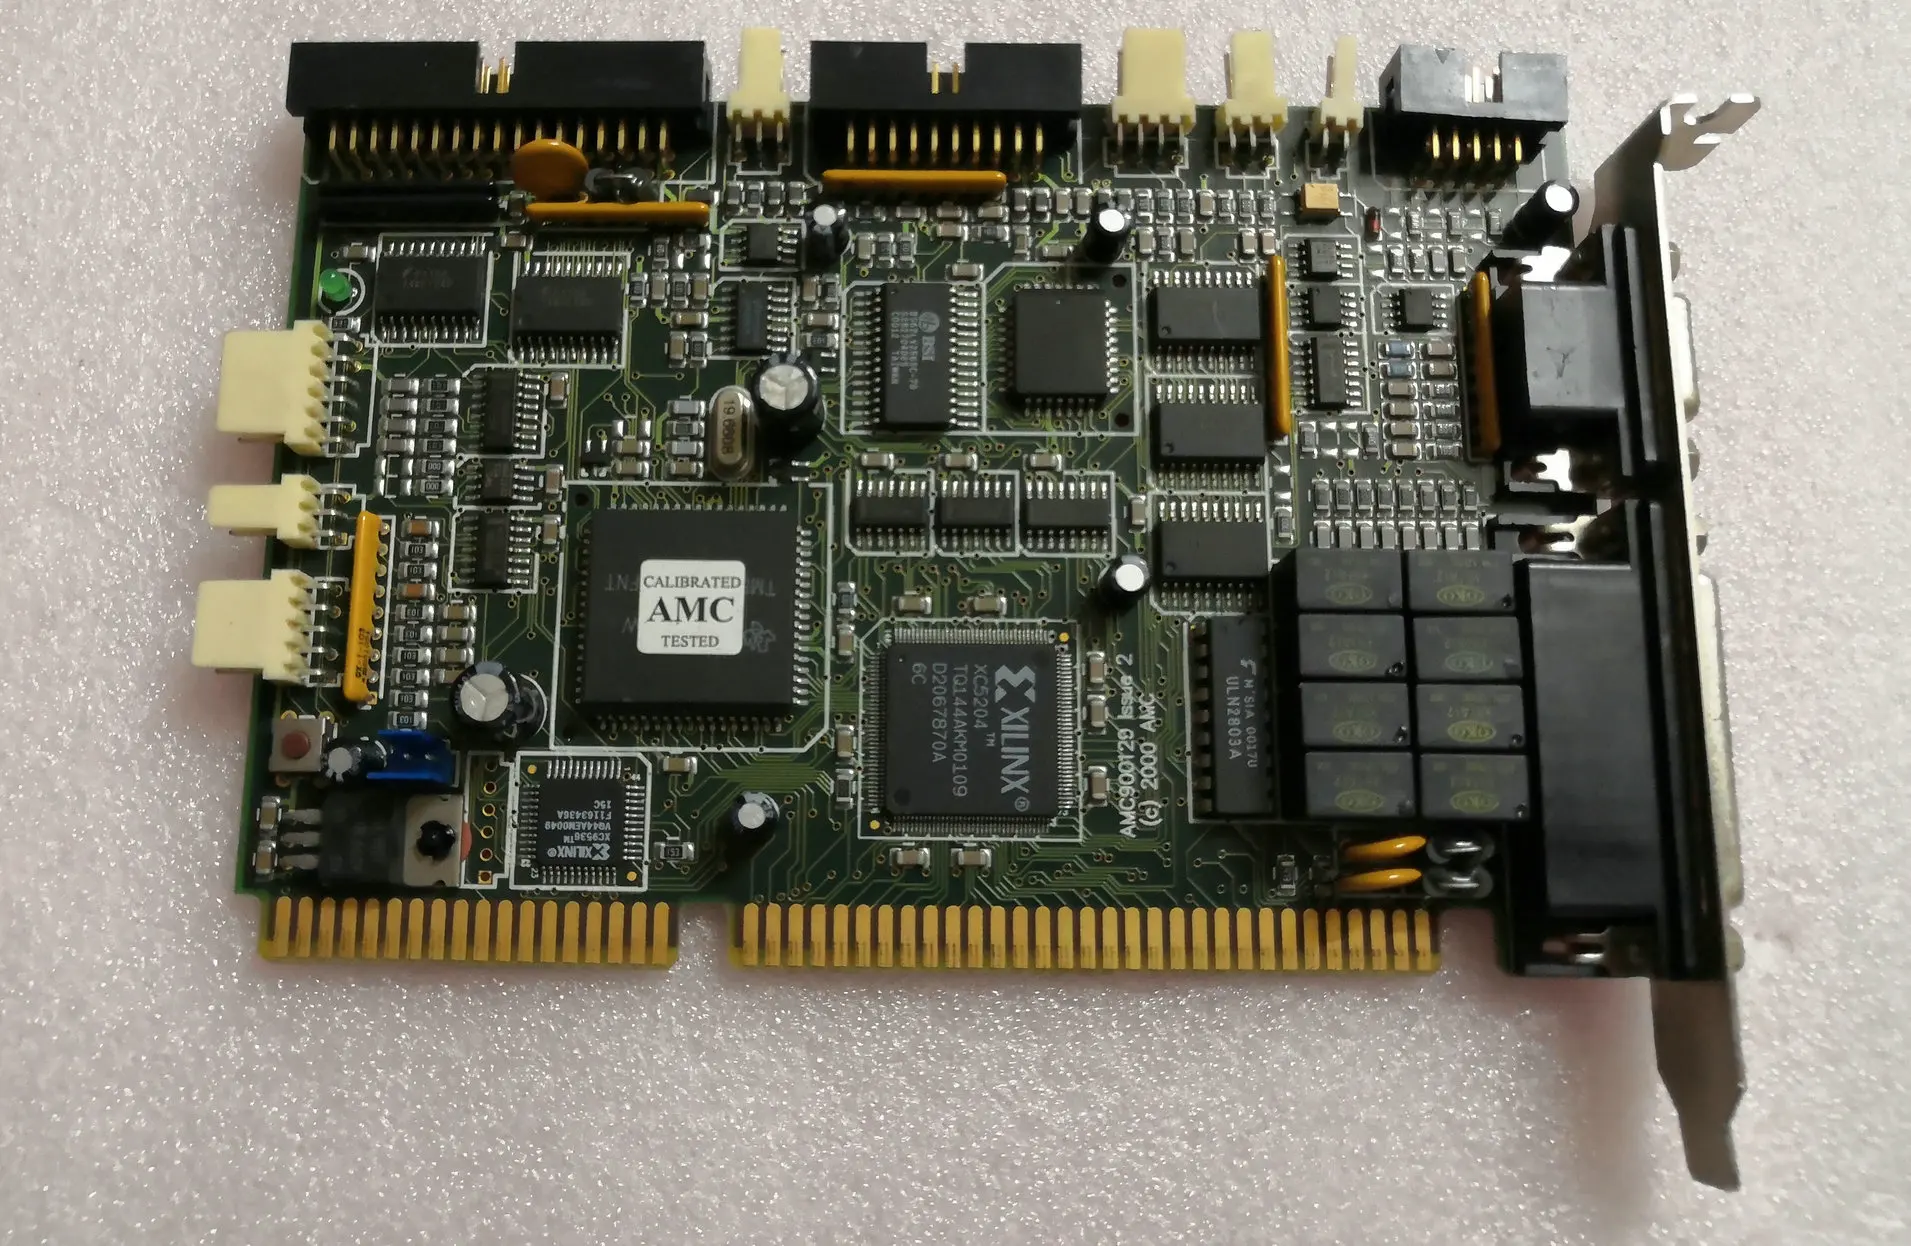 Amc900129 Issue 2 ISA-карта для Tektronix at-970